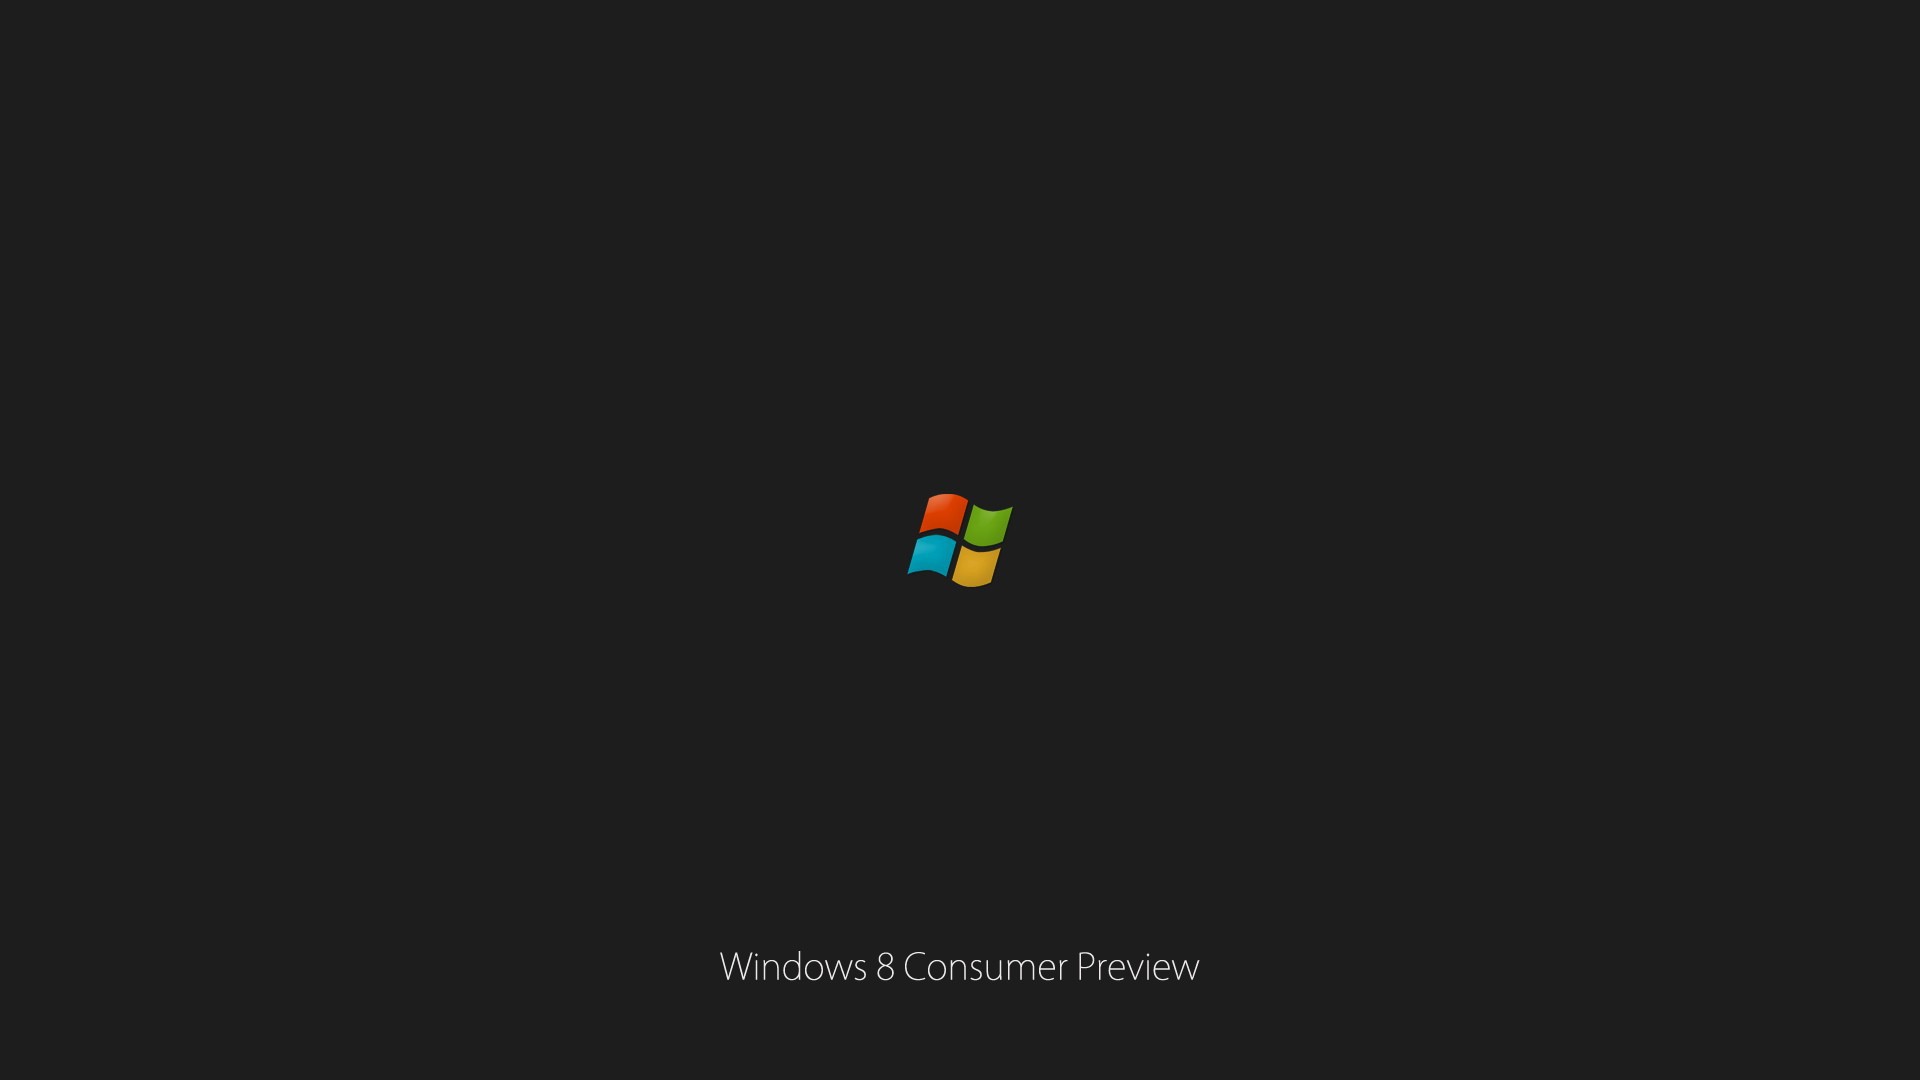 Windows 8 Logo Wallpaper 1920x1080 1920x1080 Windows 8 Wallpaper